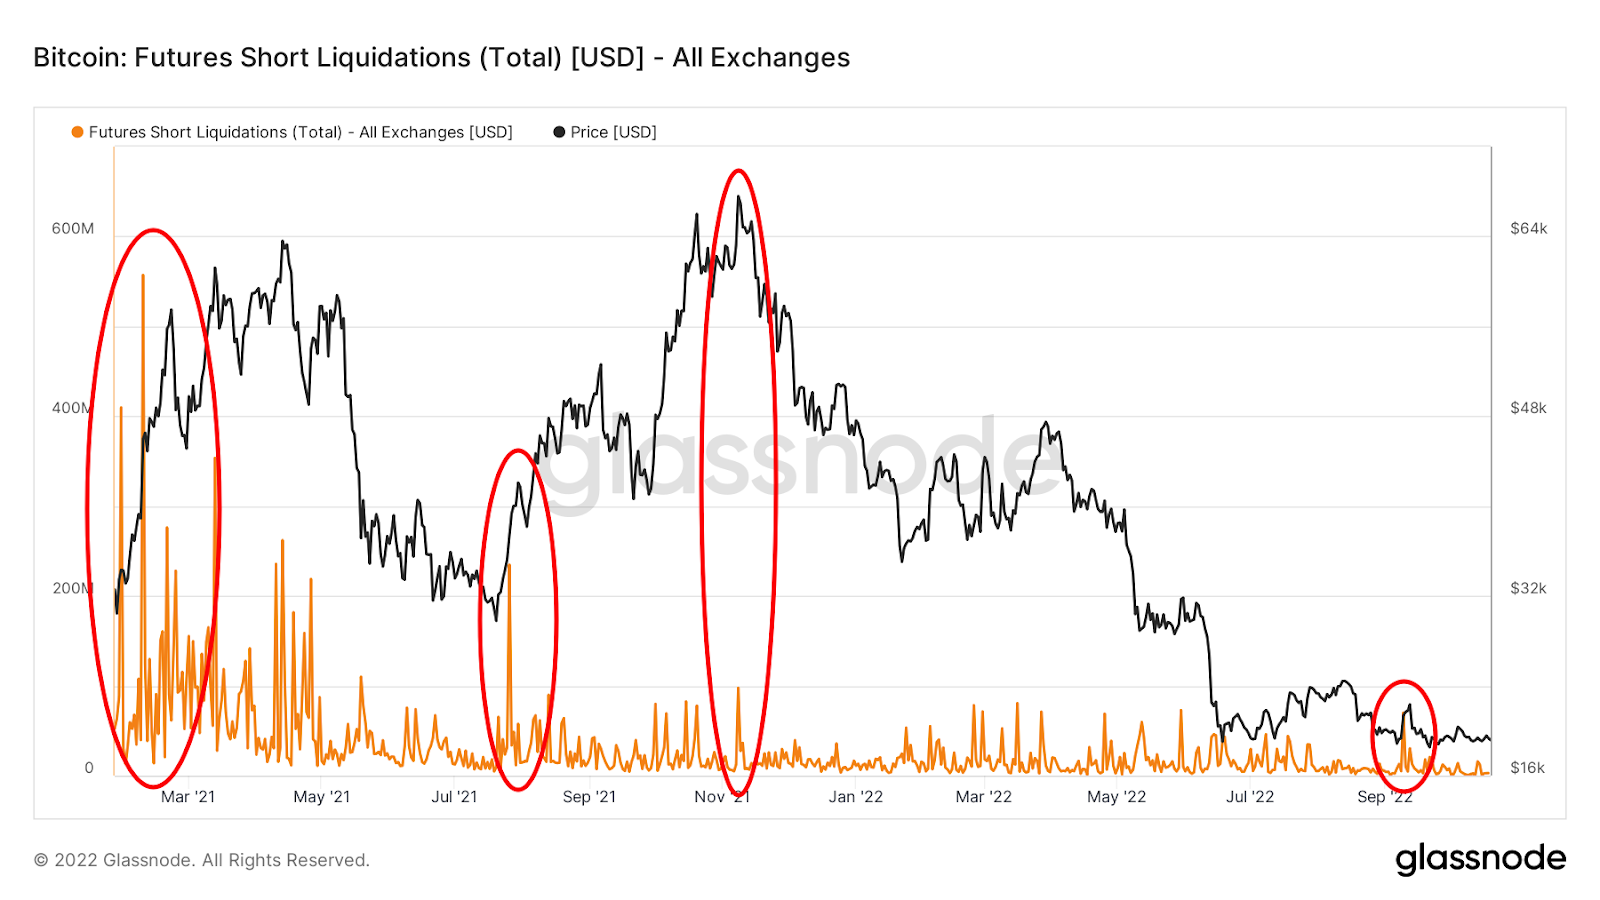 Short liquidations for Bitcoin futures